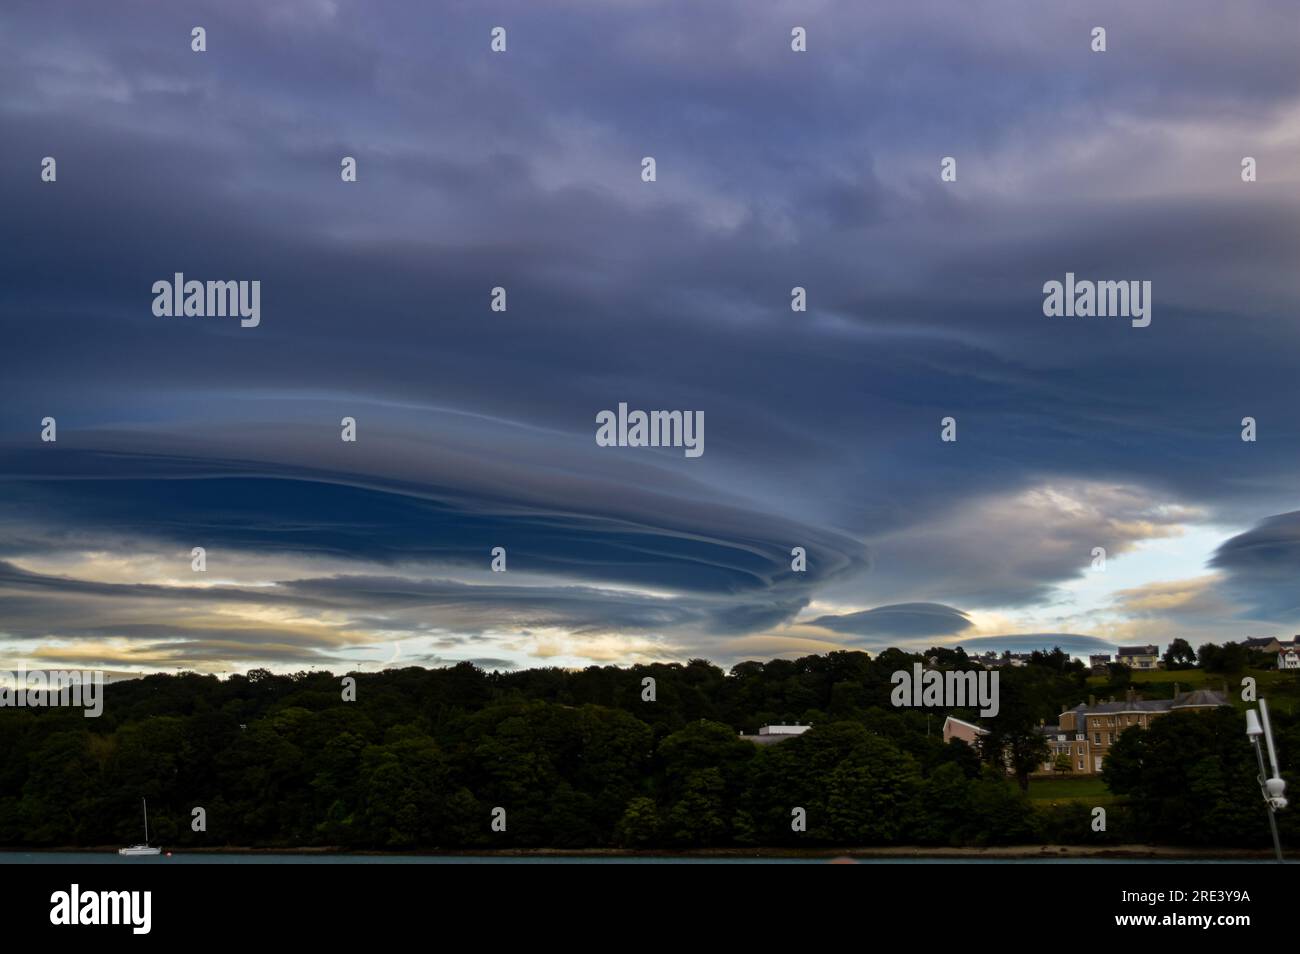 Strange clouds in the sky, Wales, United Kindgom Stock Photo